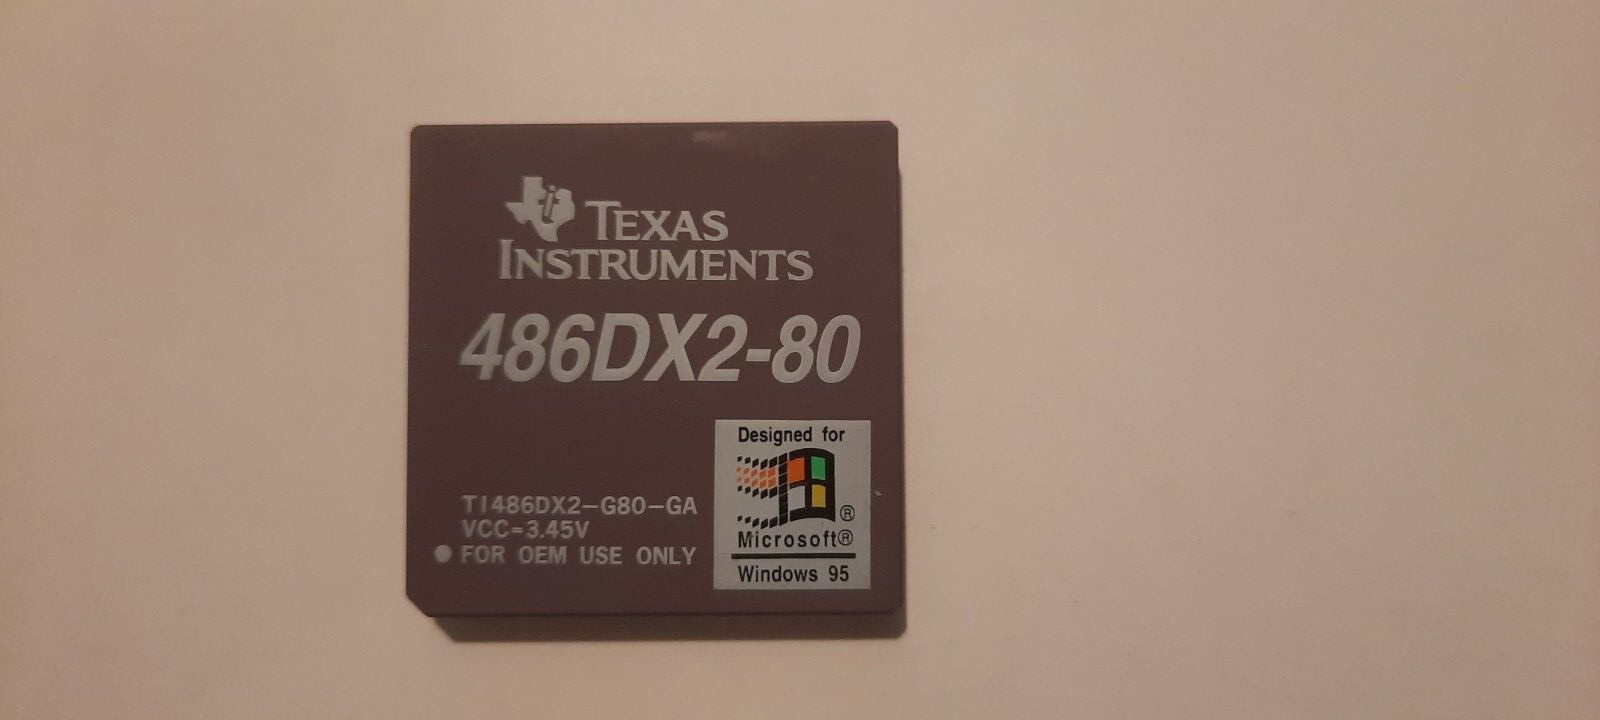 TI486DX2-G80-GA 486DX2-80 WIN95 logo Texas Instruments vintage CPU GOLD